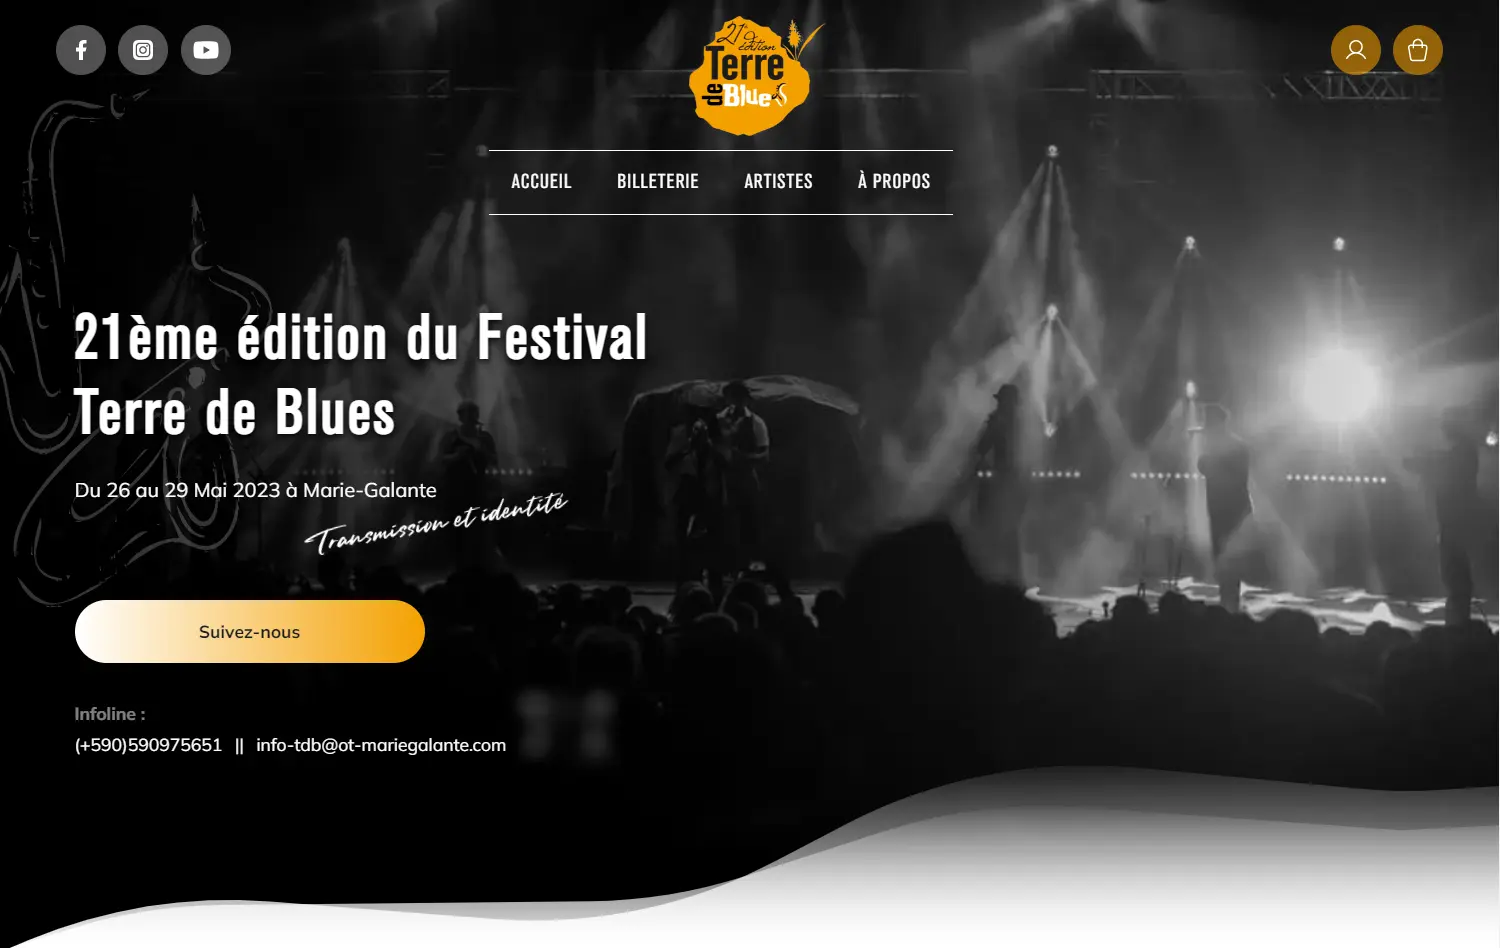 Festival terre de blues 2023 designed by UXDev